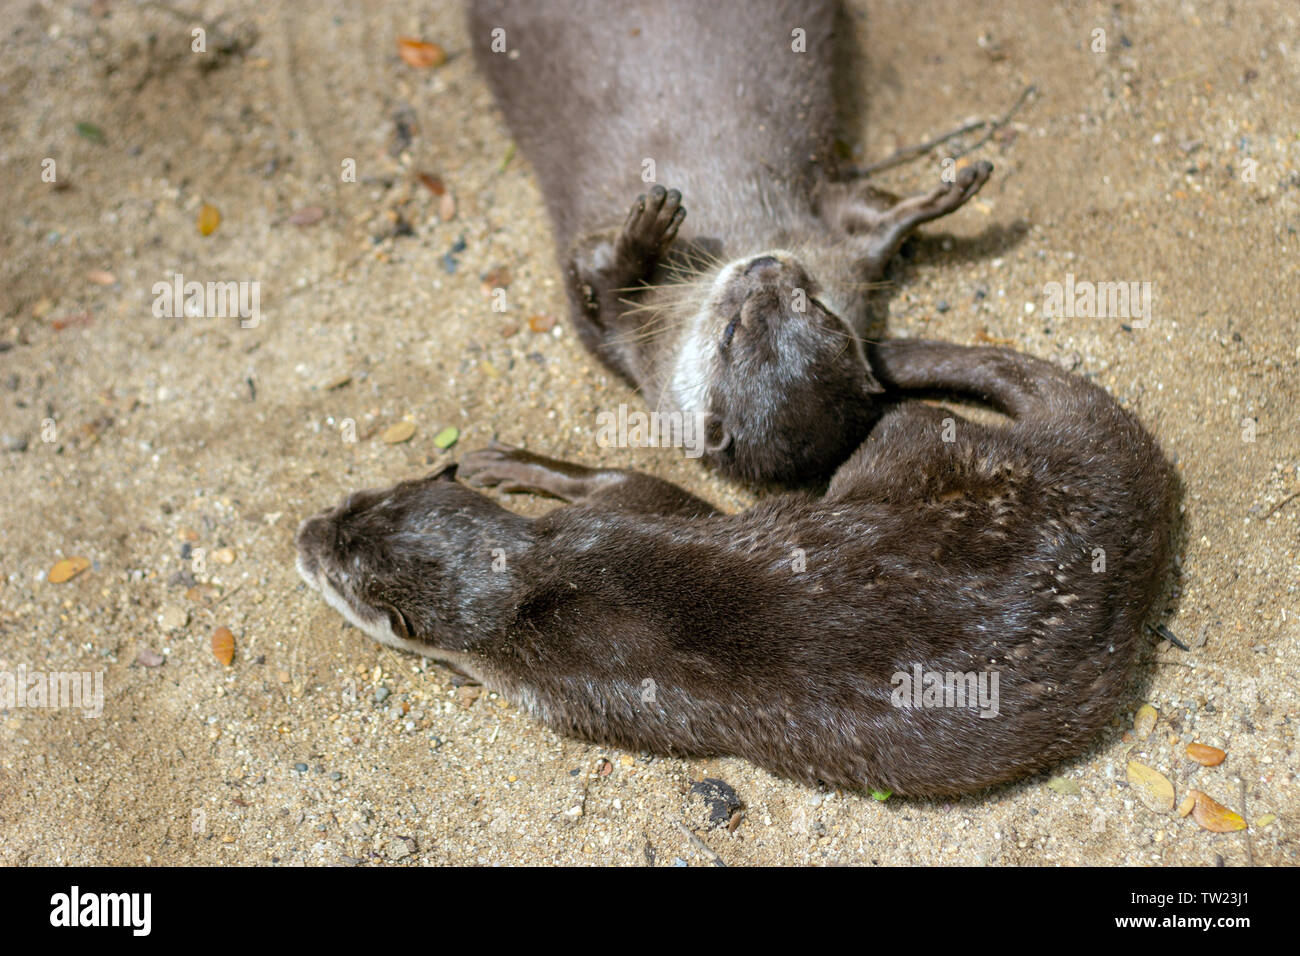 Otter säugetier Tier im Freien im Zoo Natur wildlife Konzept Stockfoto